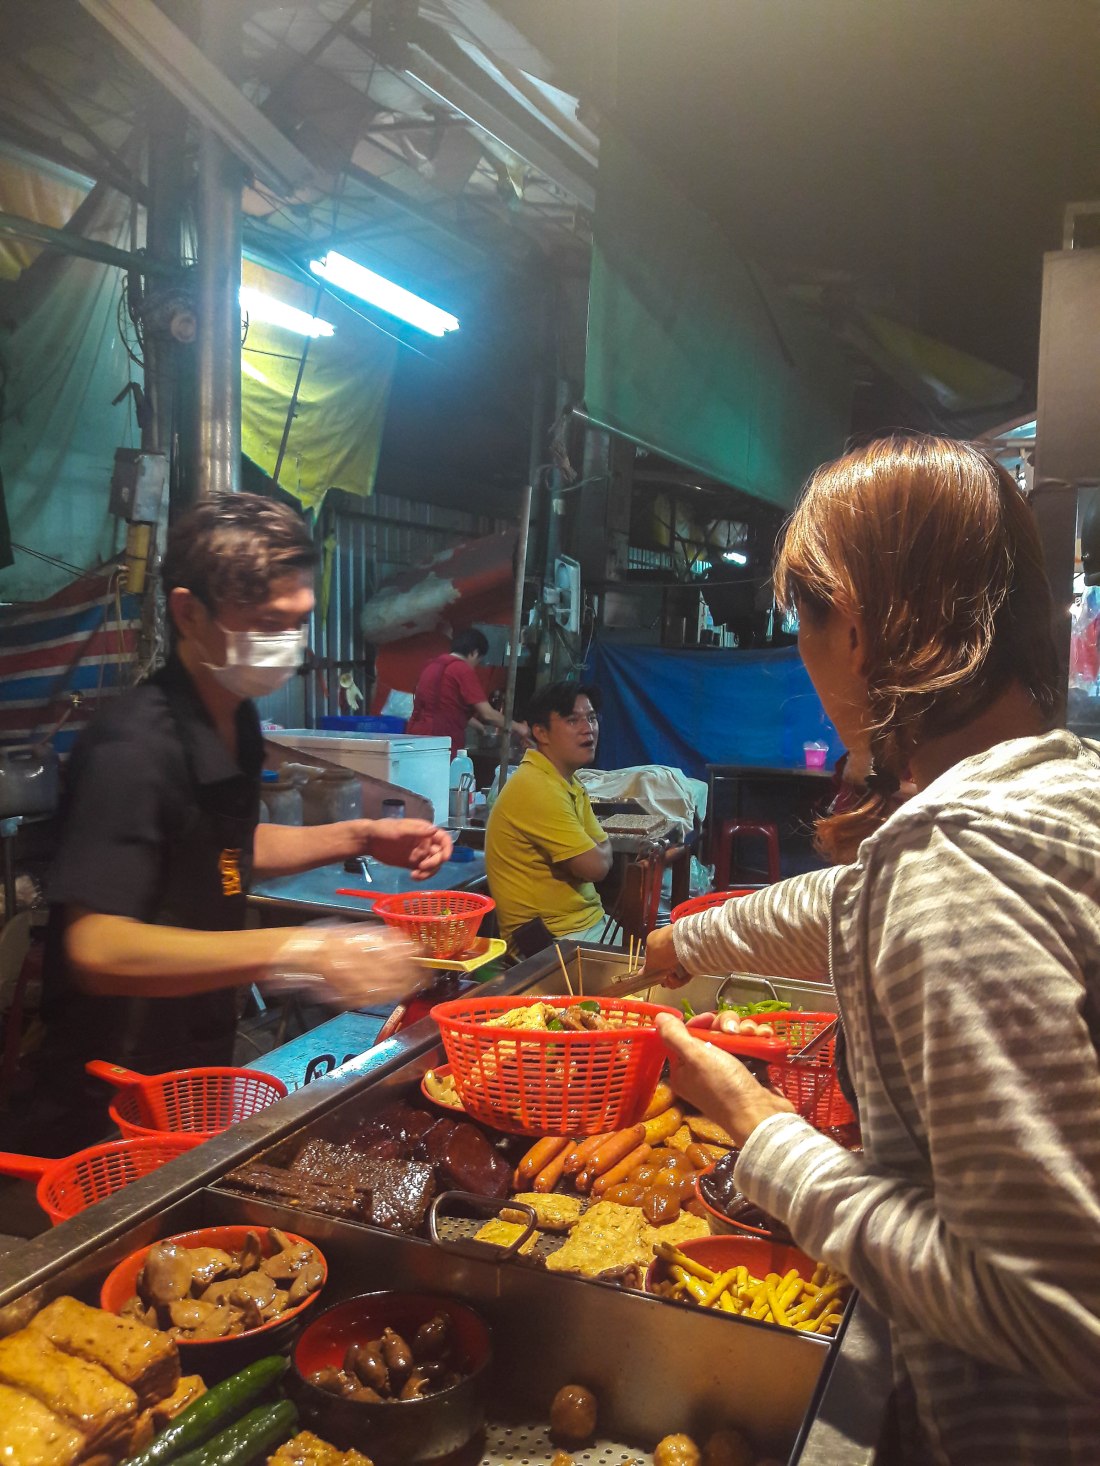 Taichung night market